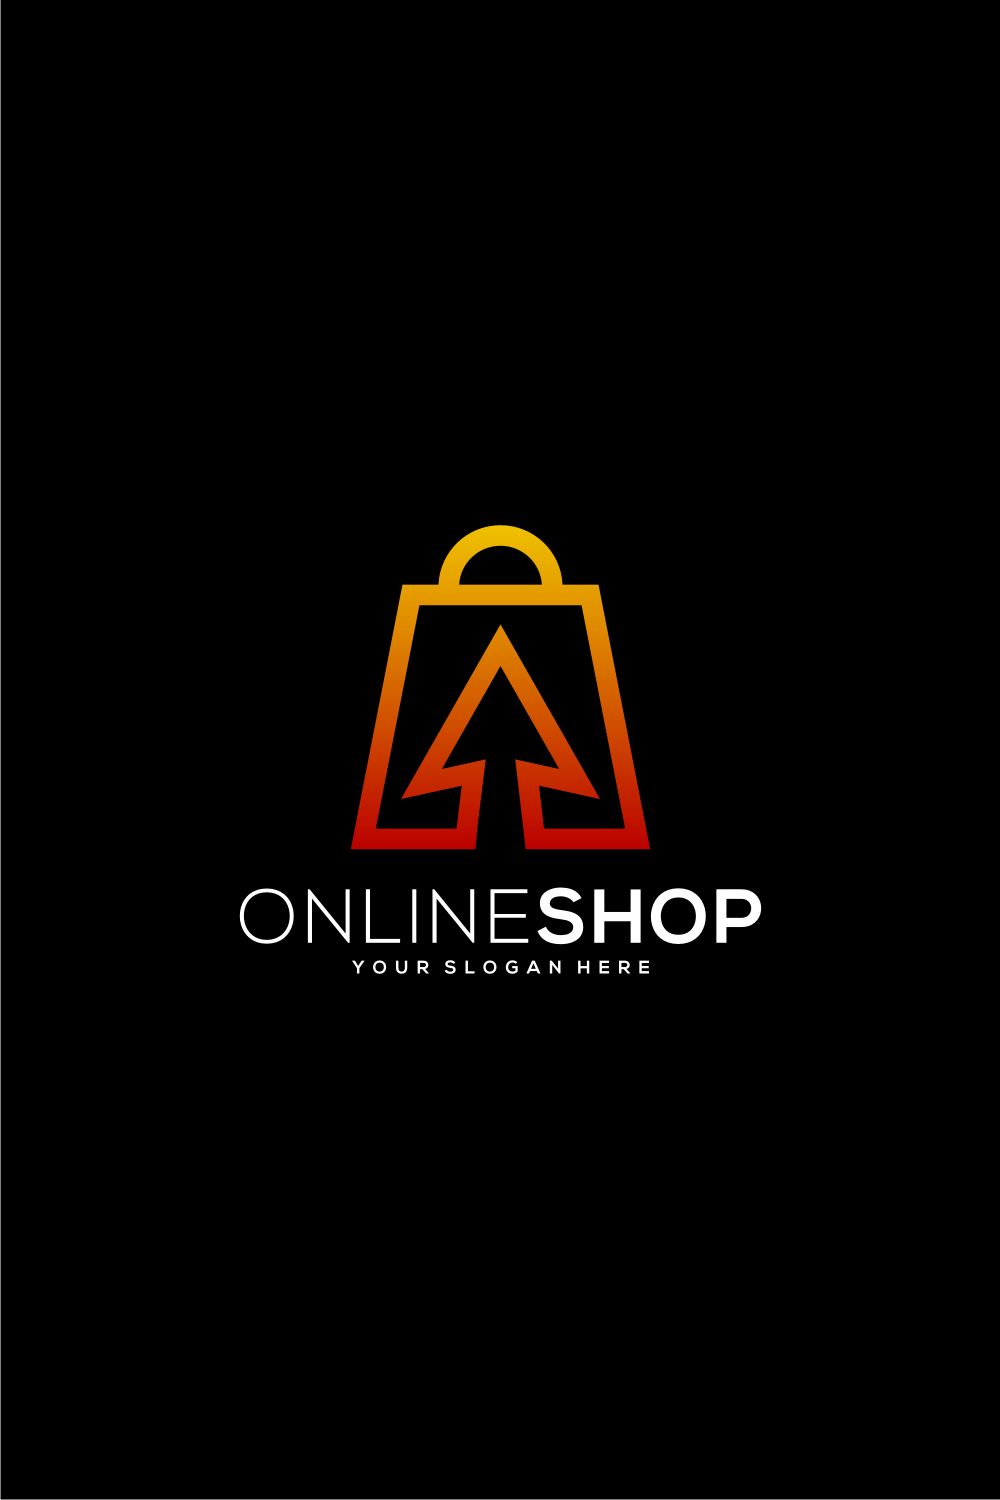 Online Shop Logo Design Vector with Arrow pinterest image.